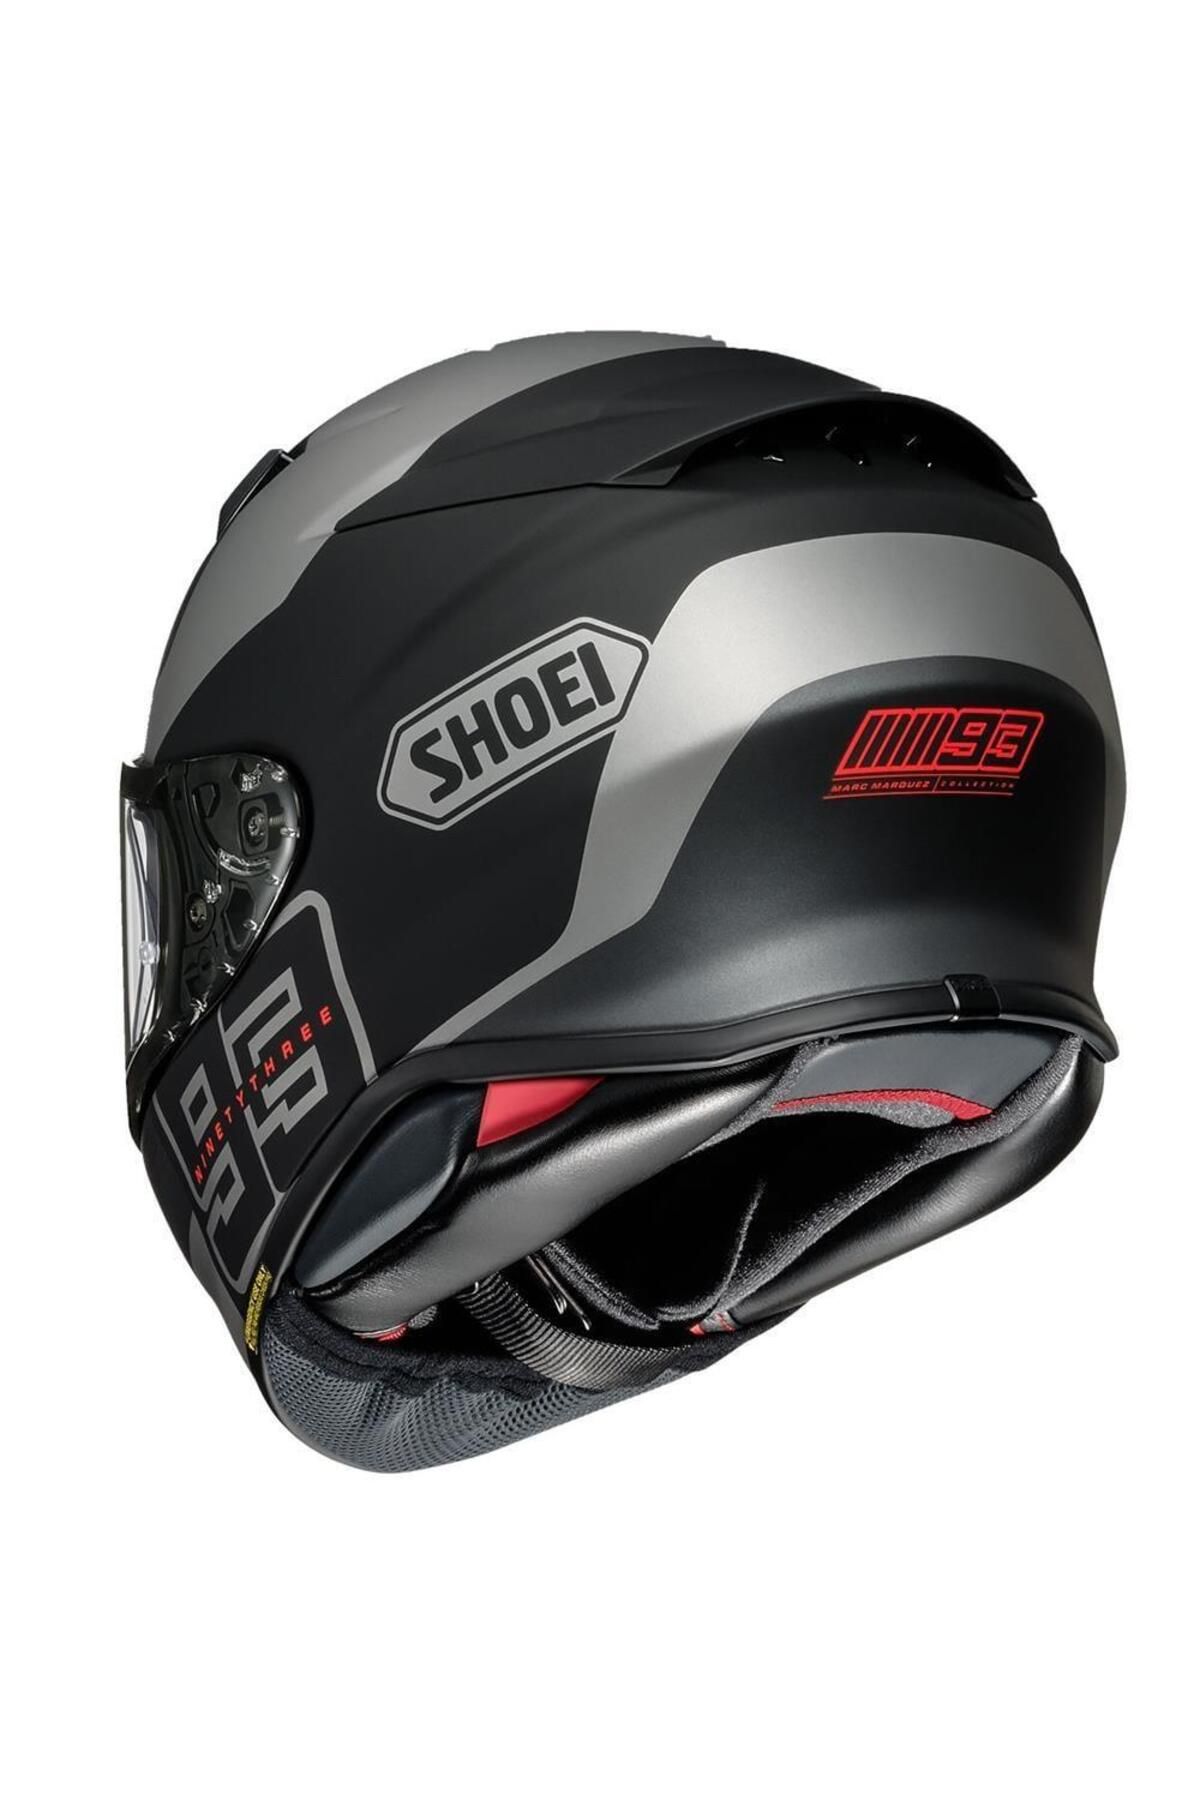 Shoei Nxr 2 Mm93 Collection Full Face Motosiklet Kaskı